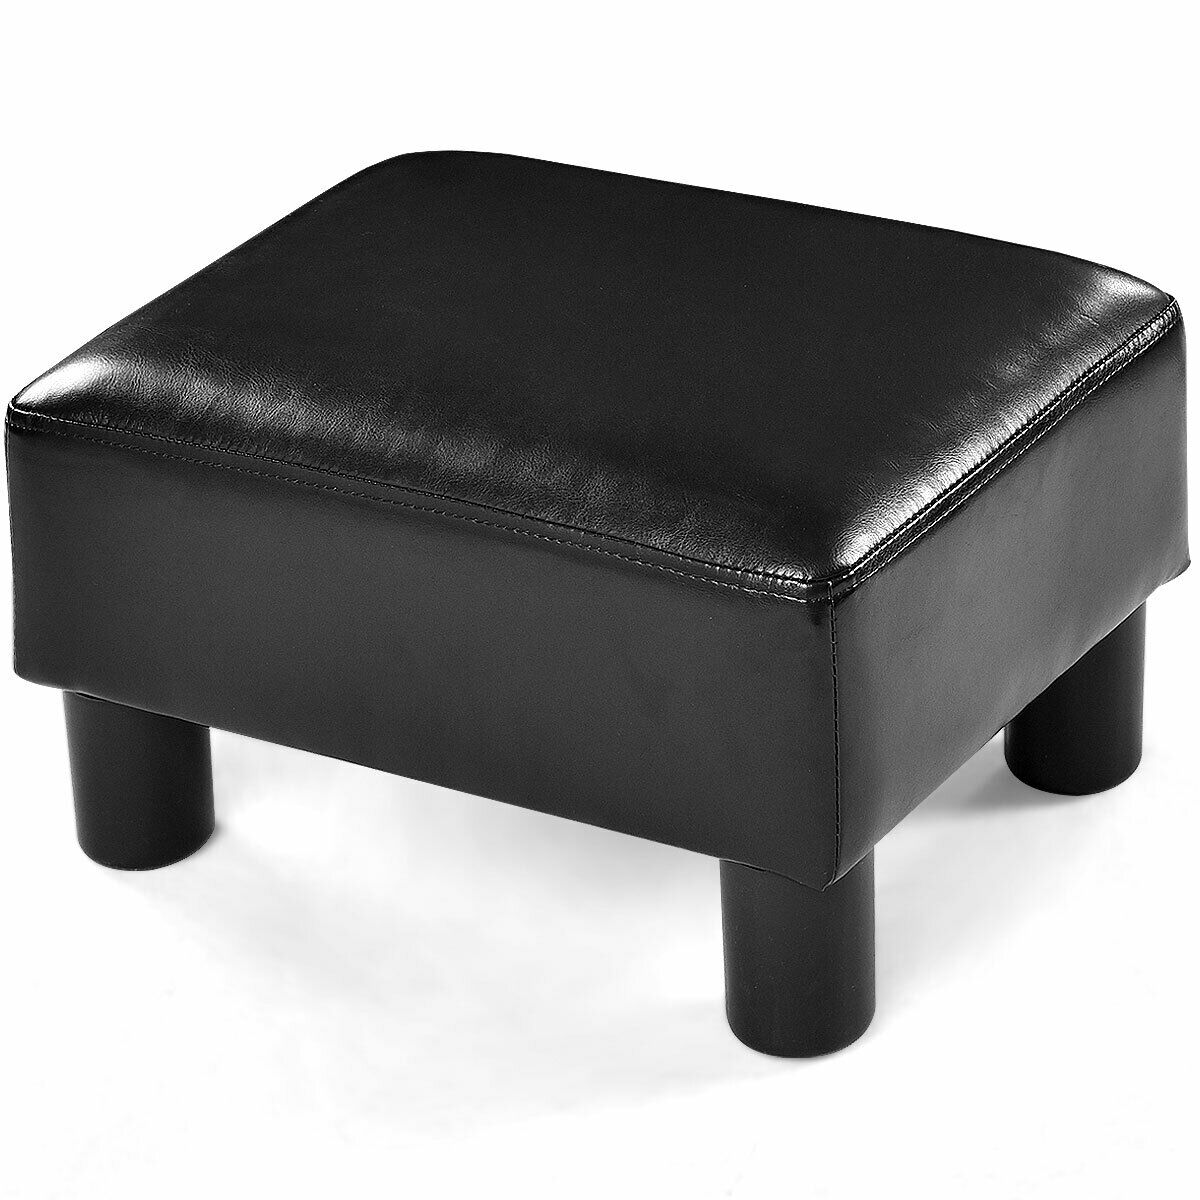 Goplus Ottoman PU Leather Footrest Rectangular Foot Rest Small Seat Stool Black